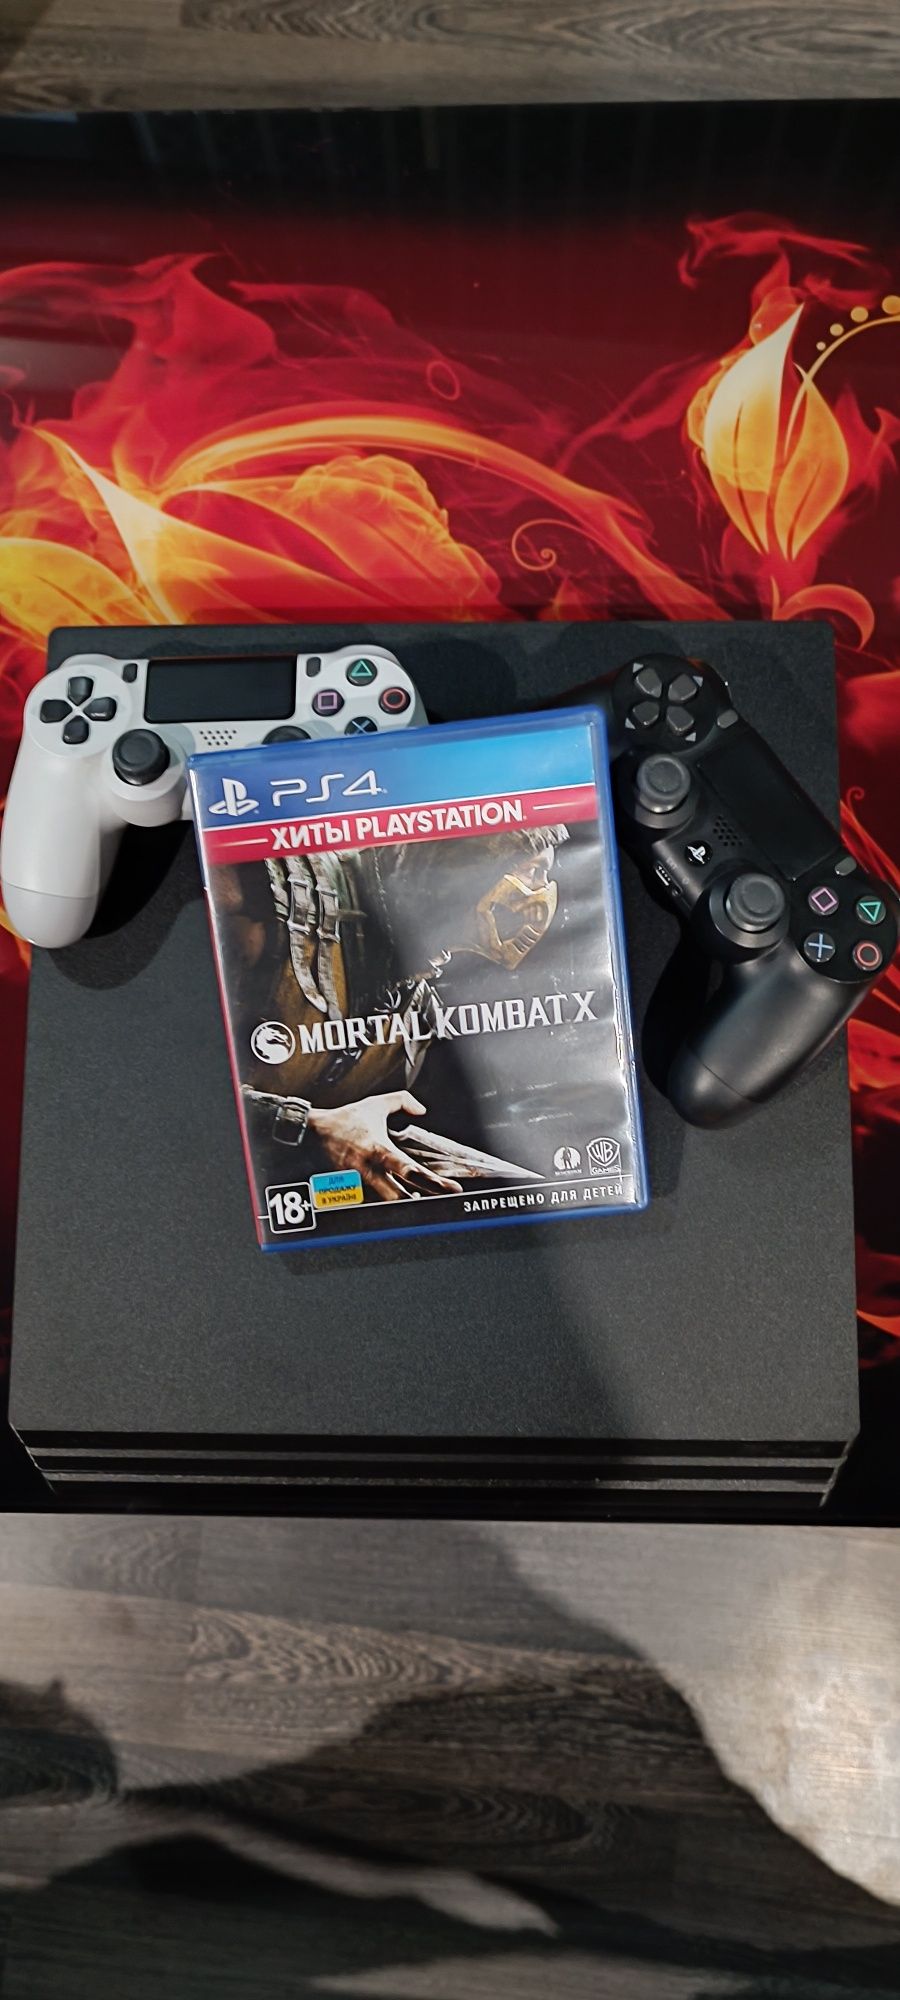 Приставка Sony Playstation 4 PS4 Pro на 1 Т
Б/У
Состояние отличное
Пол